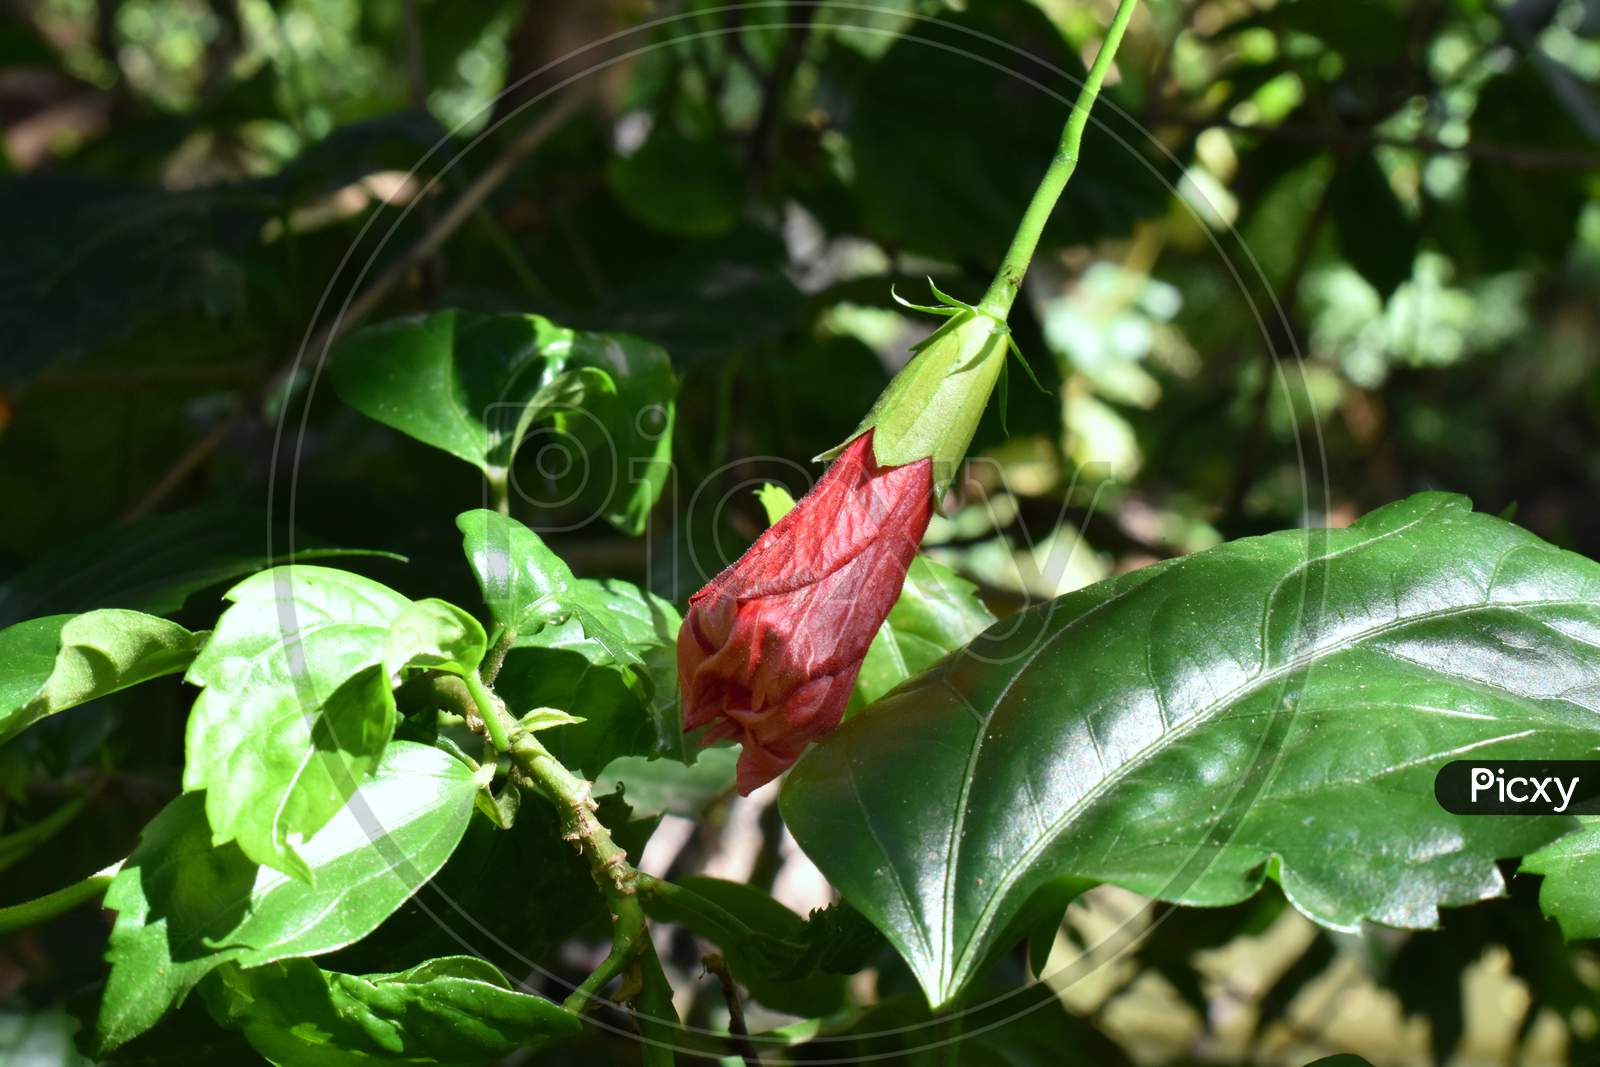 Red China Rose Bud. Hibiscus rosa-sinensis.